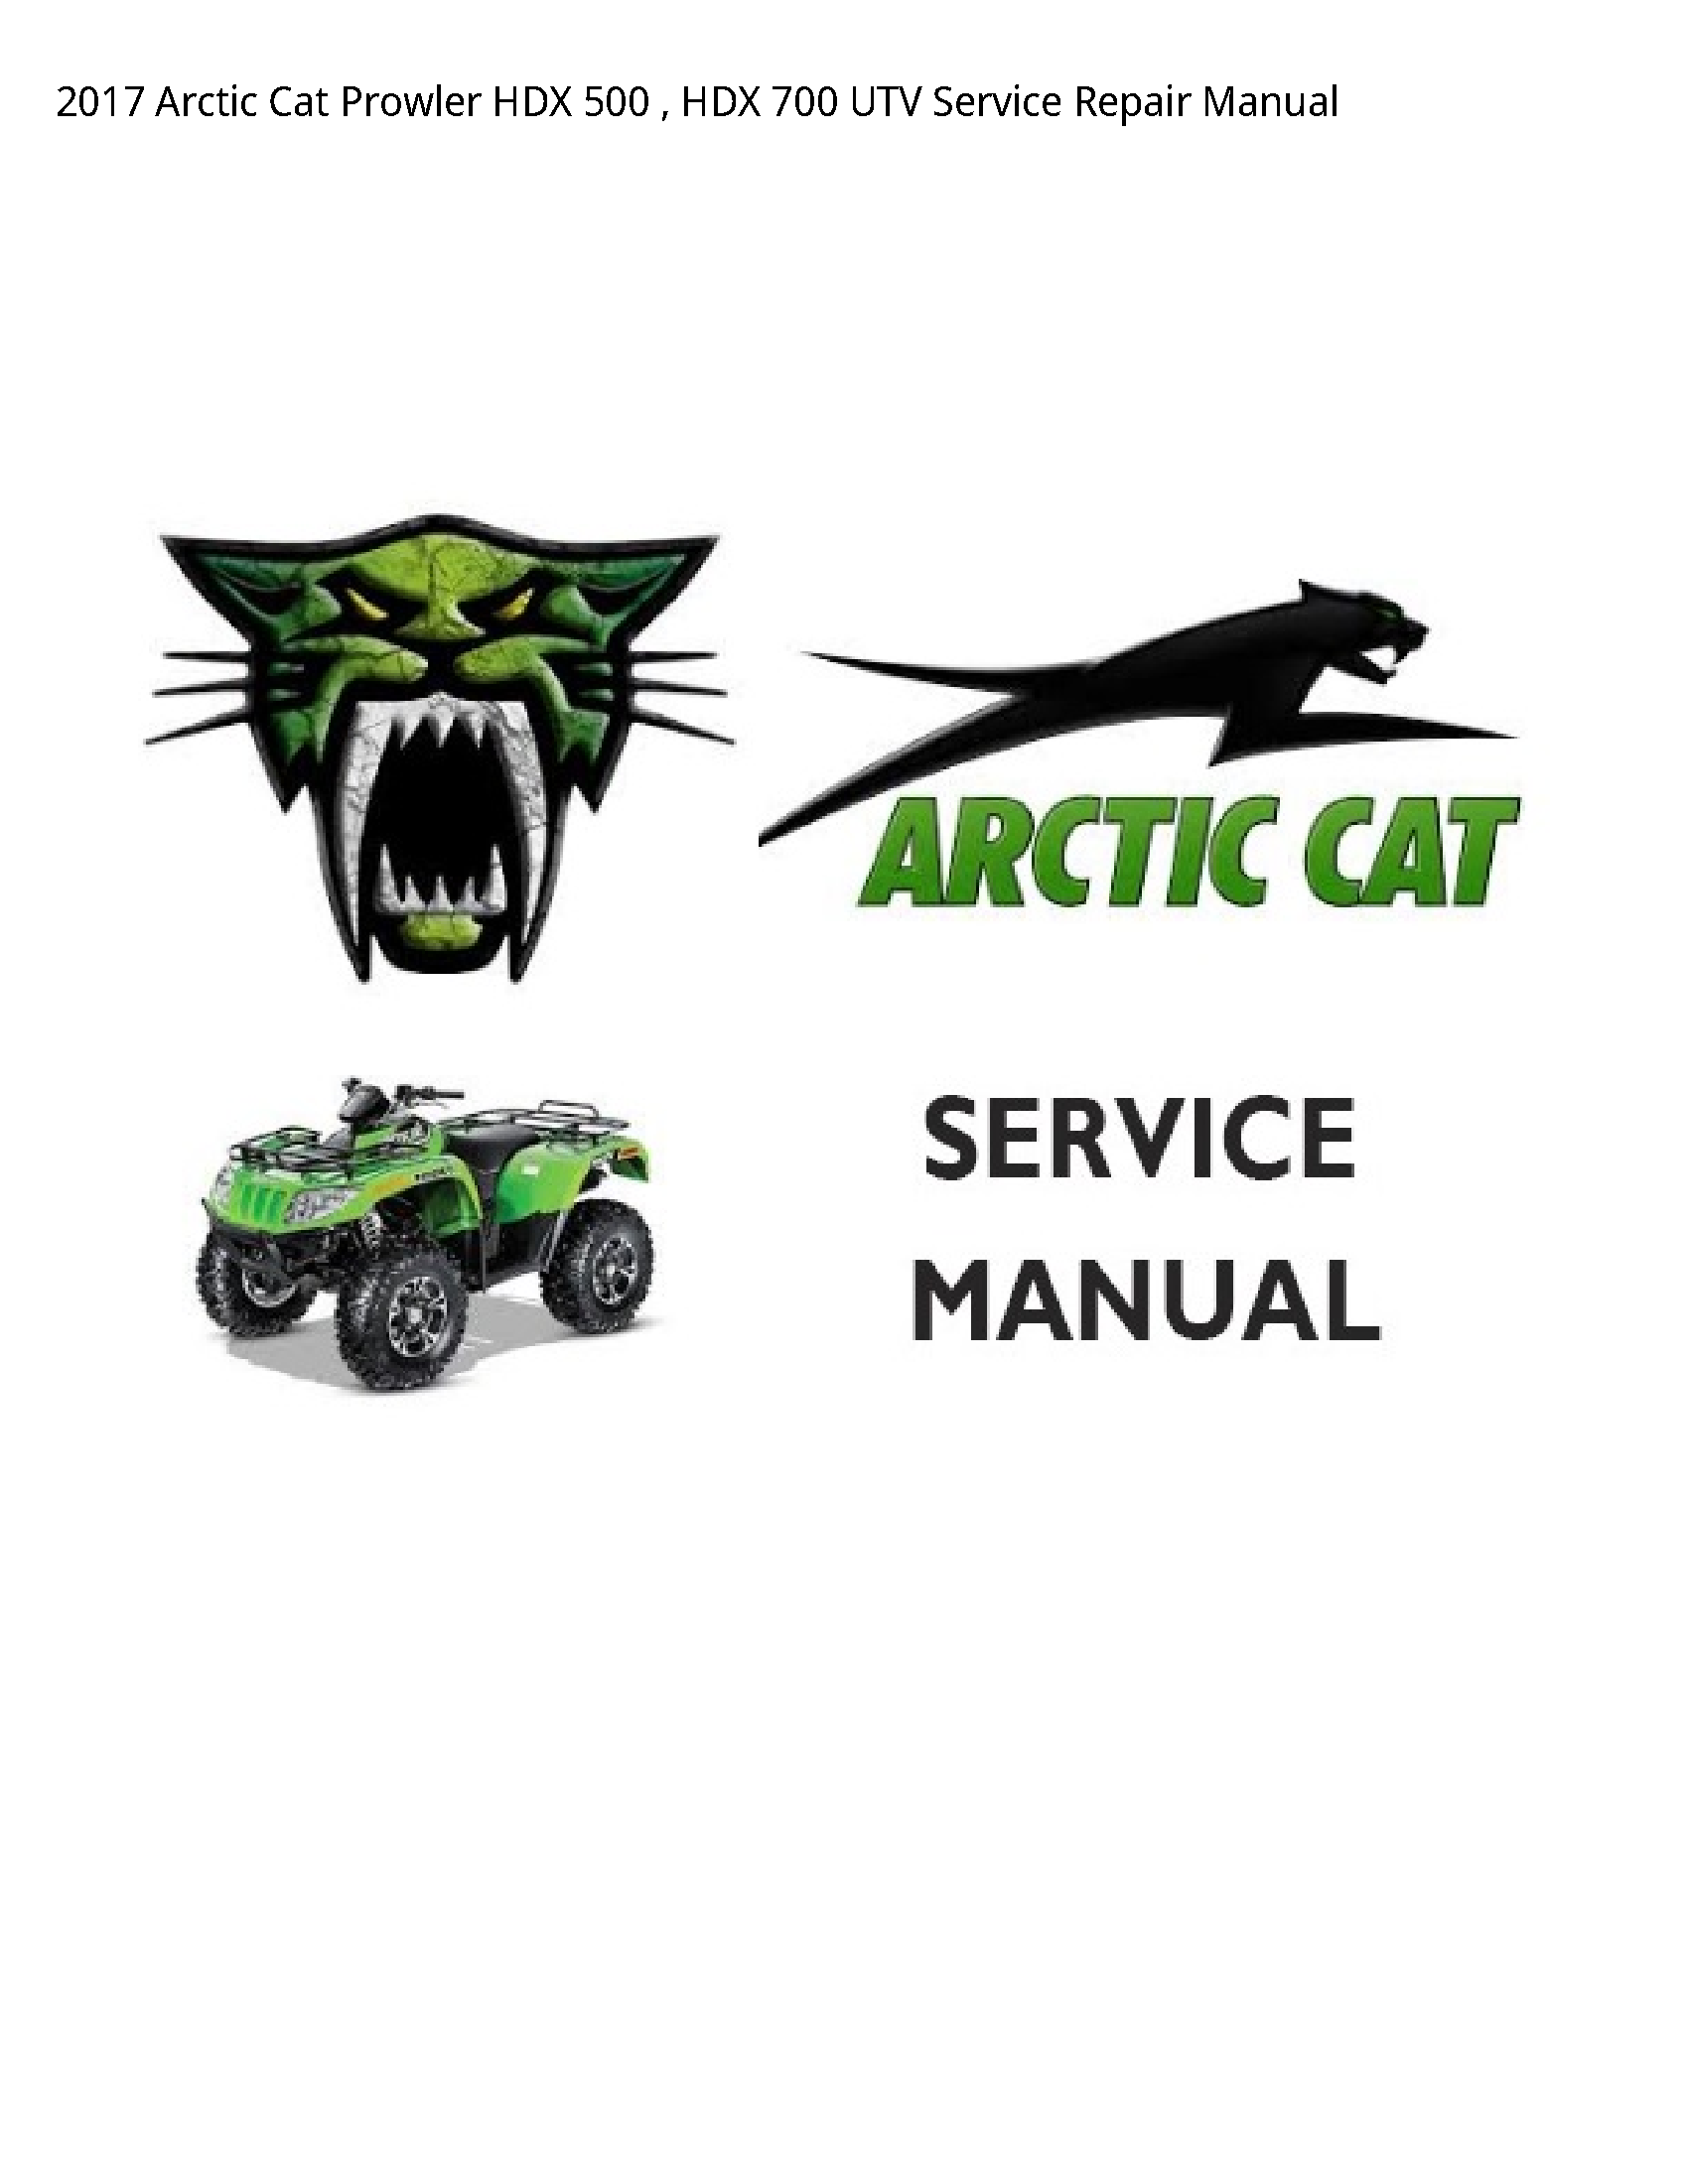 Arctic Cat 500 Prowler HDX HDX UTV manual